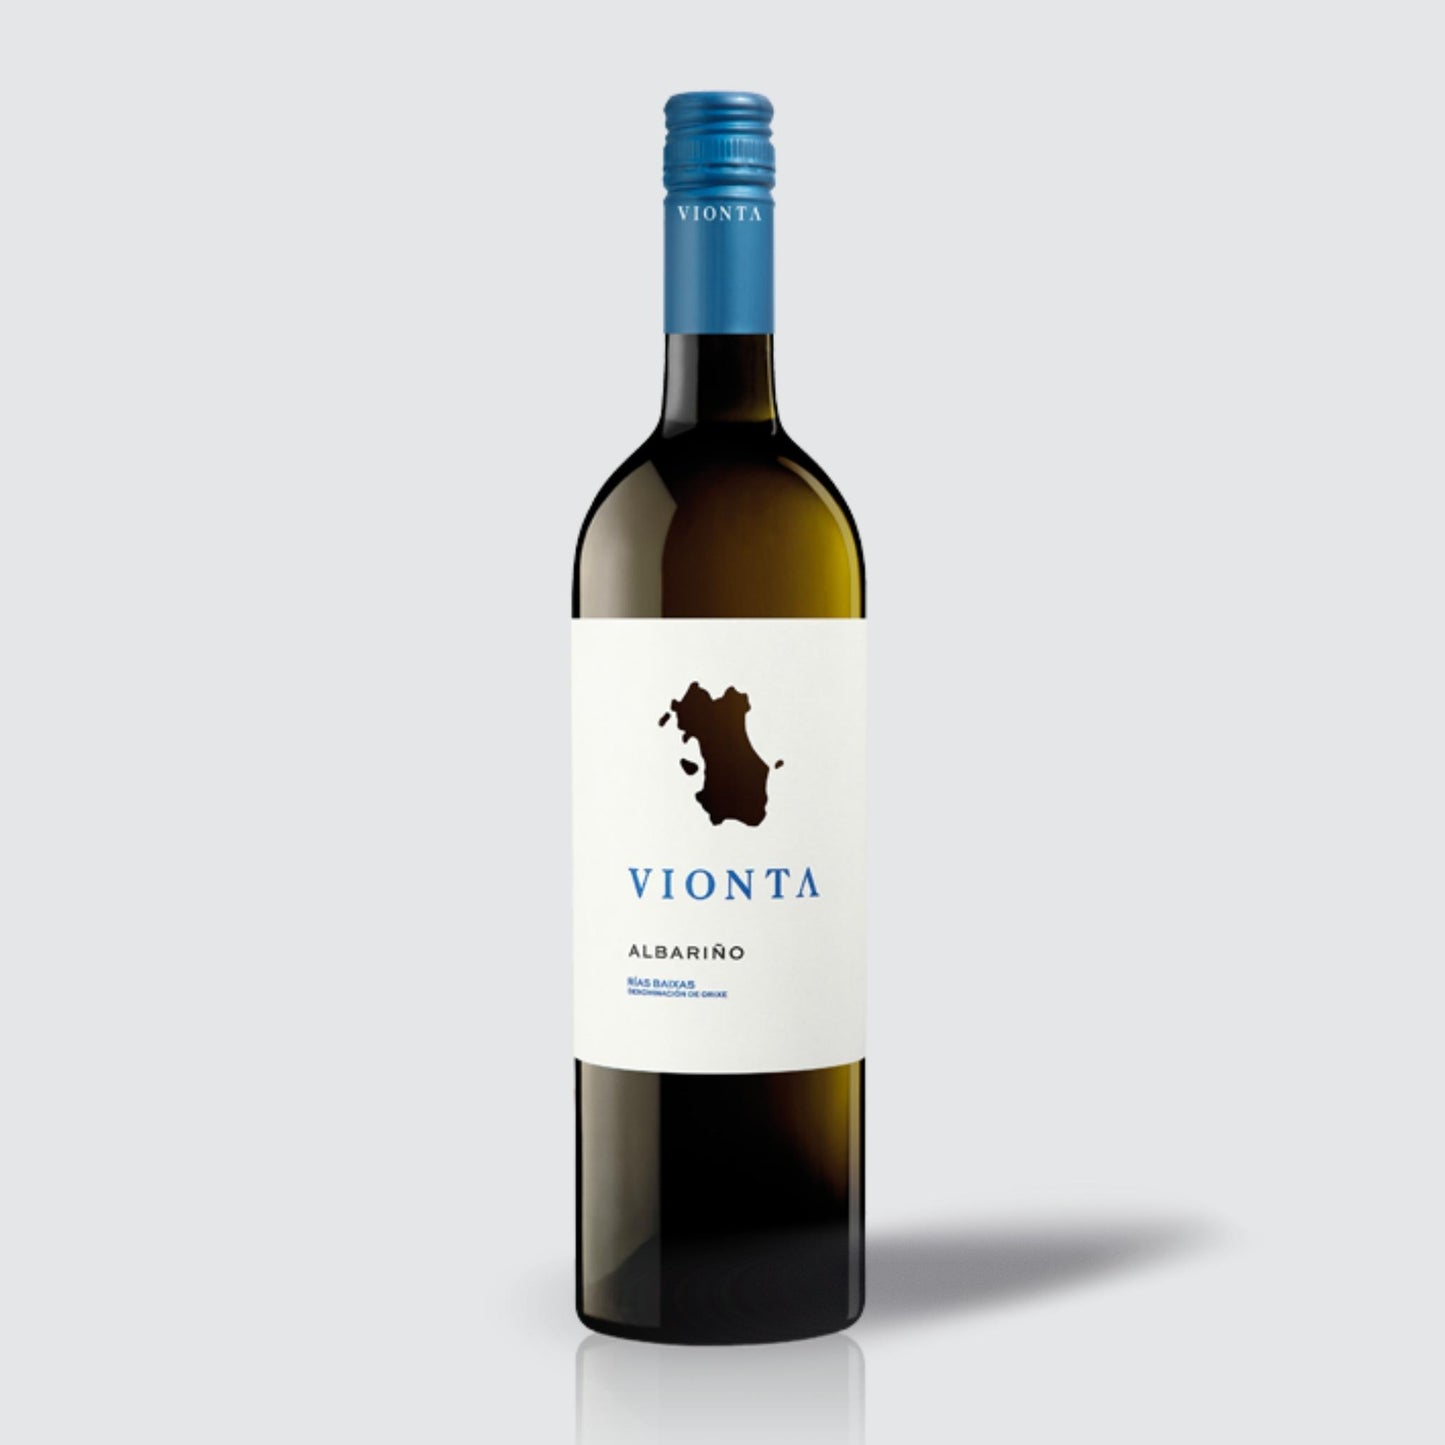 Vionta Albarino 2021 white wine from Rias Baixas